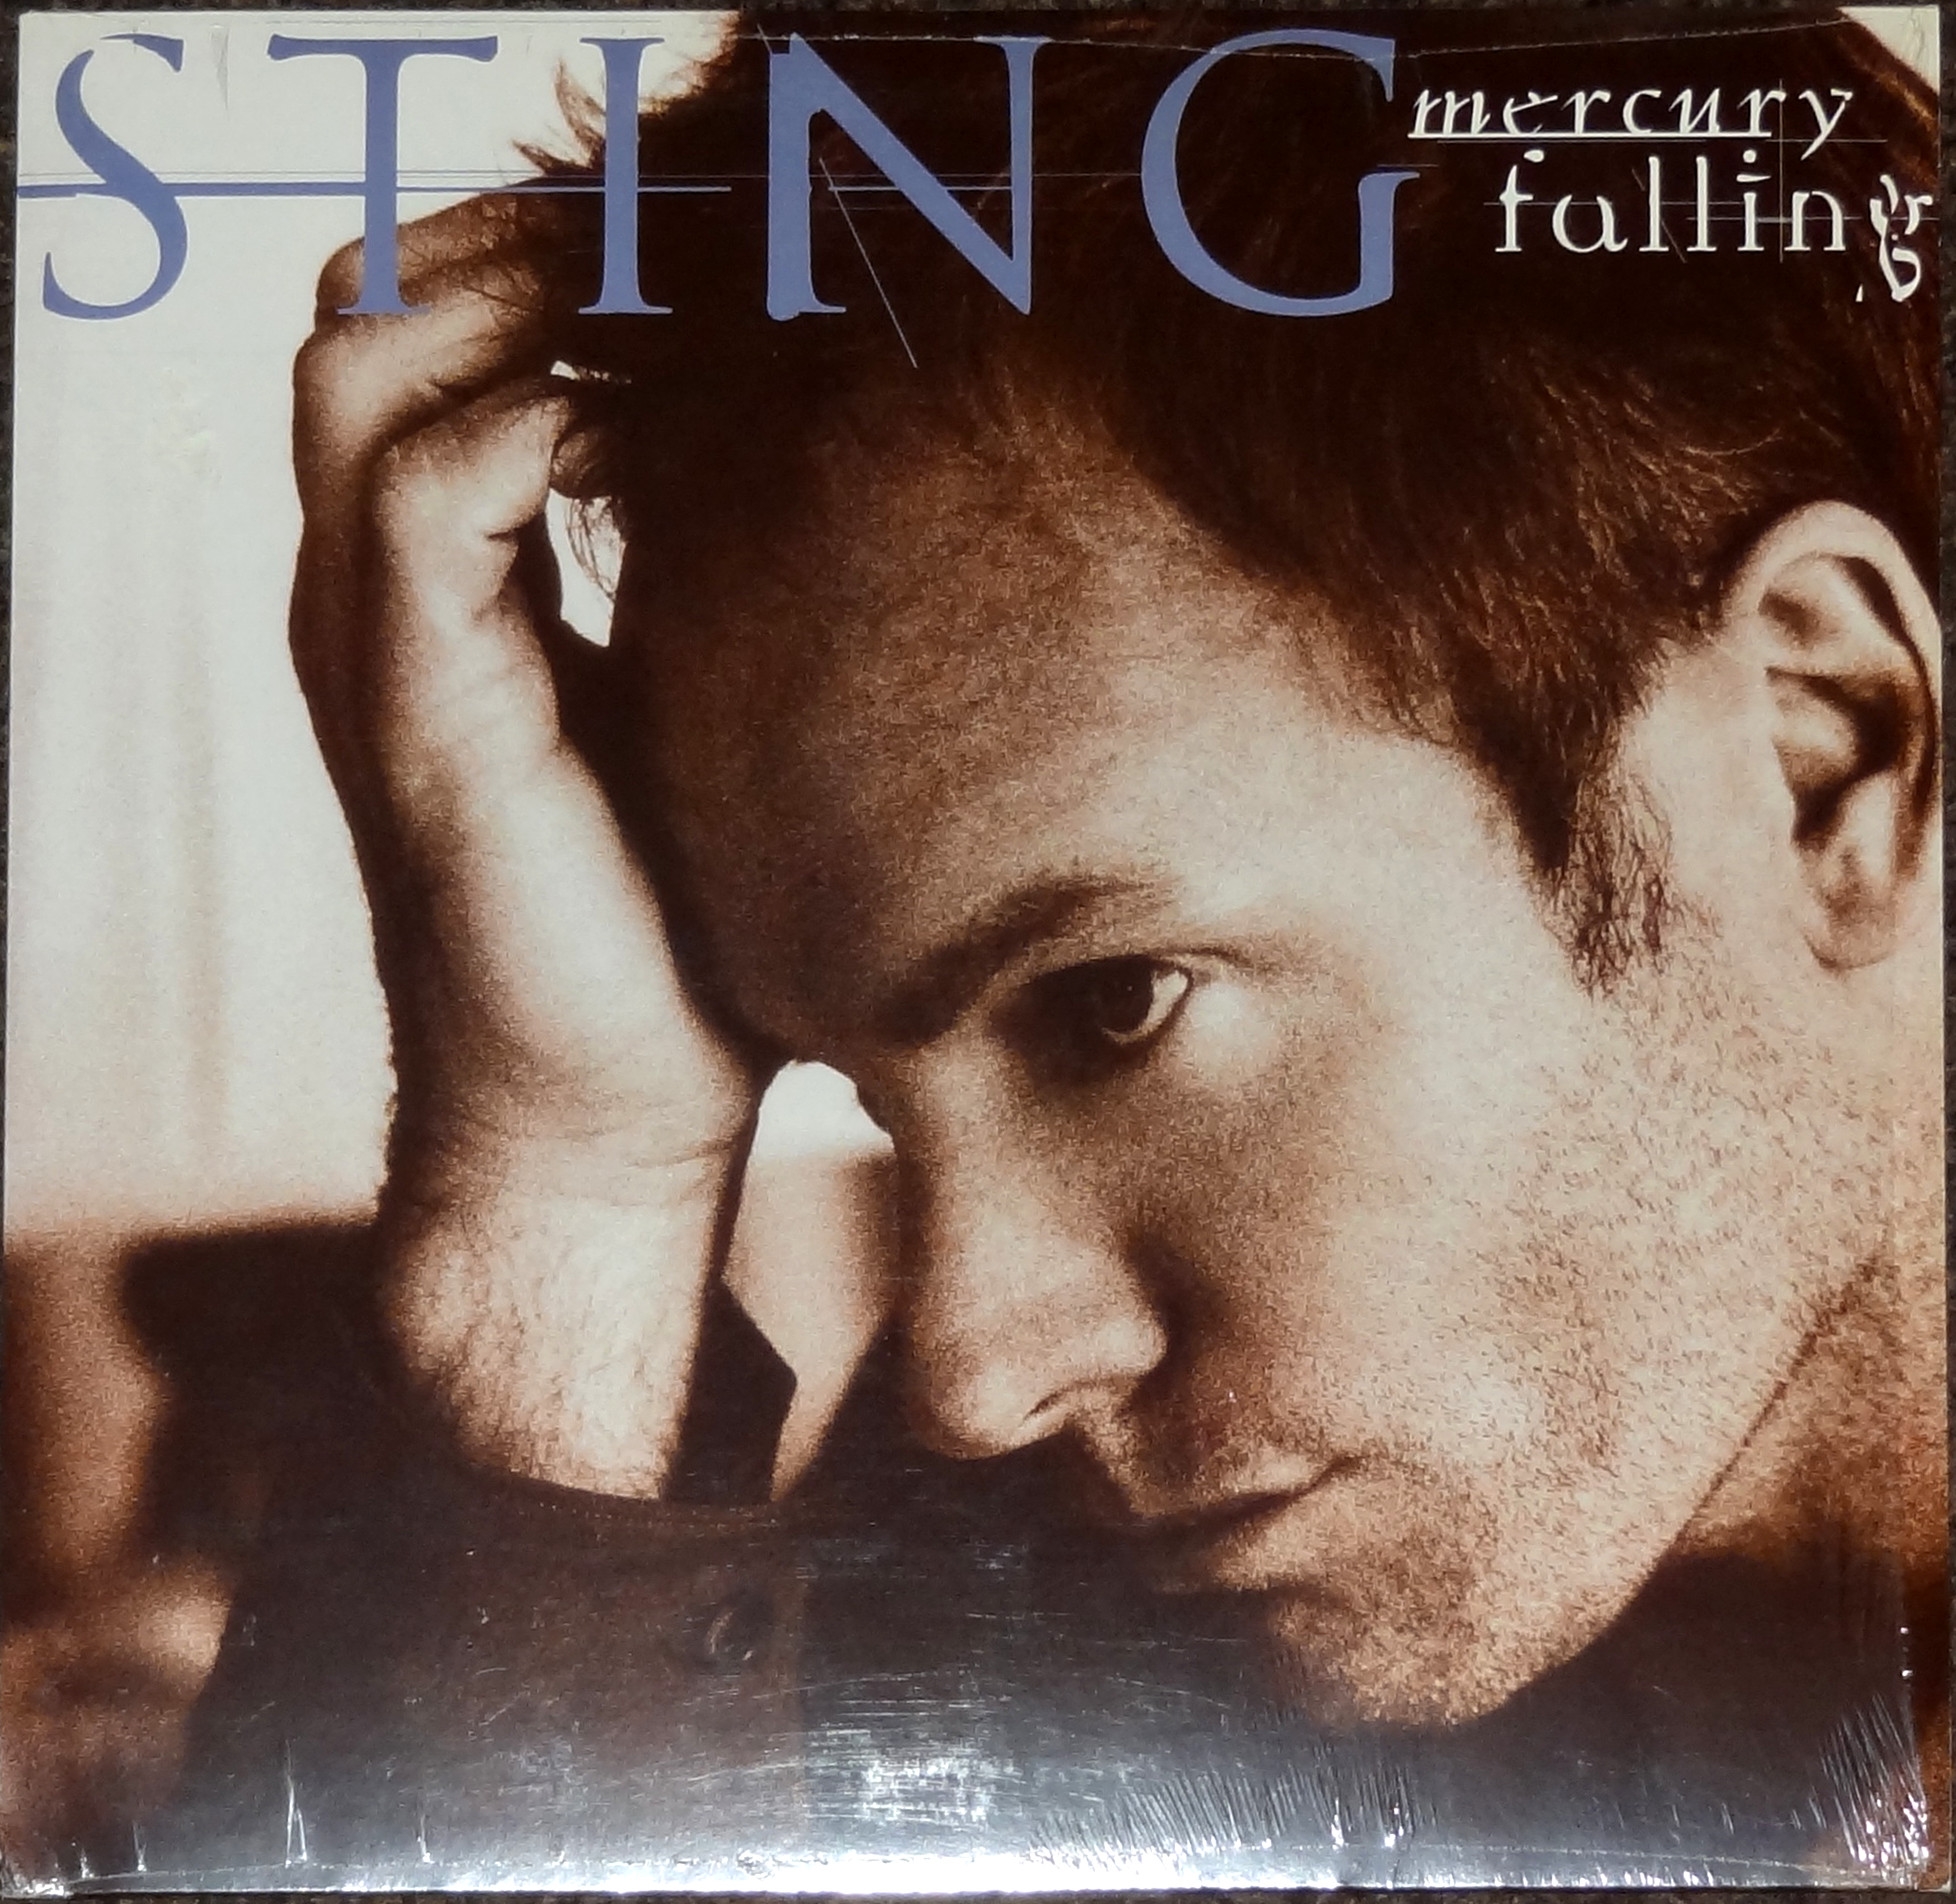 Sans regrets. Sting 1996. Sting 1996 Mercury Falling. Sting "Mercury Falling". Sting LP Sting.